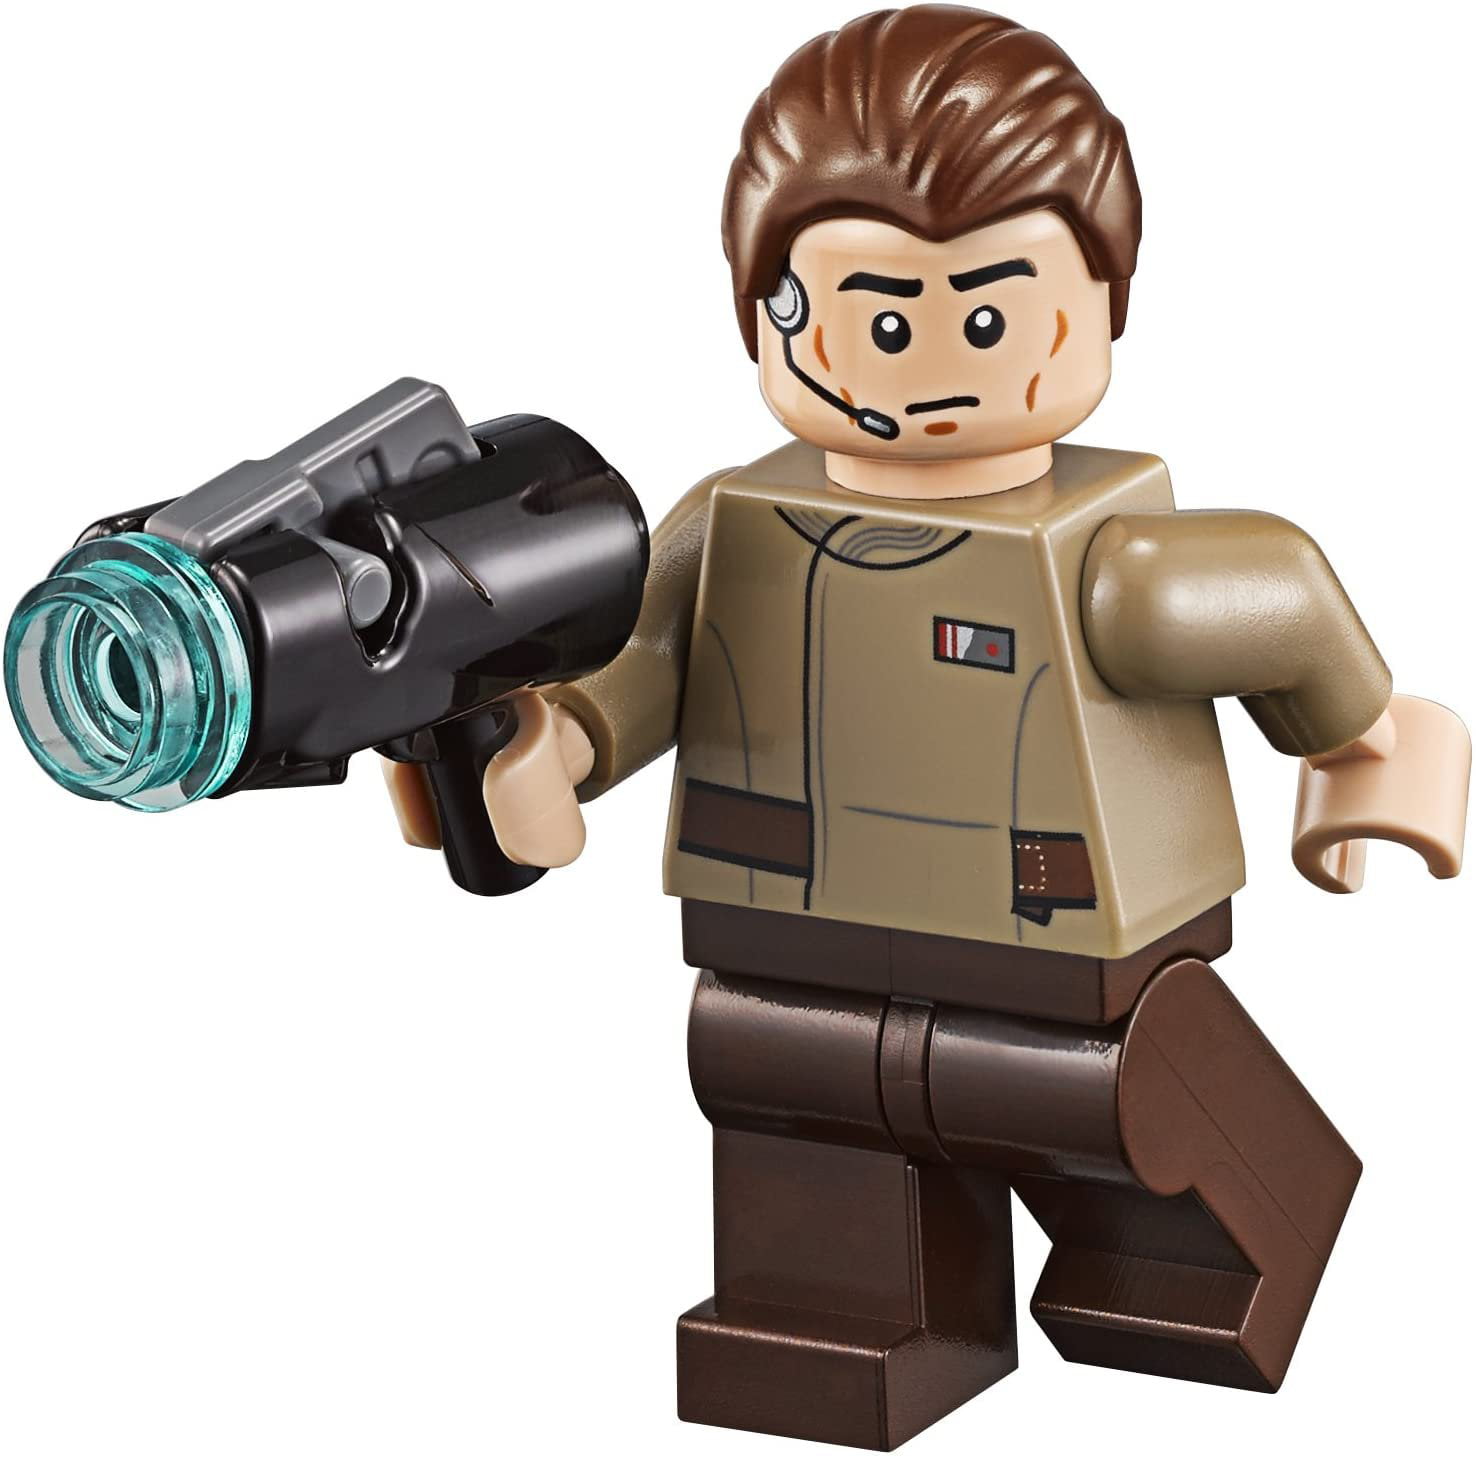 Nuevo 100% Original Lego Star Wars Minifigura Resistance Trooper Set 75131 